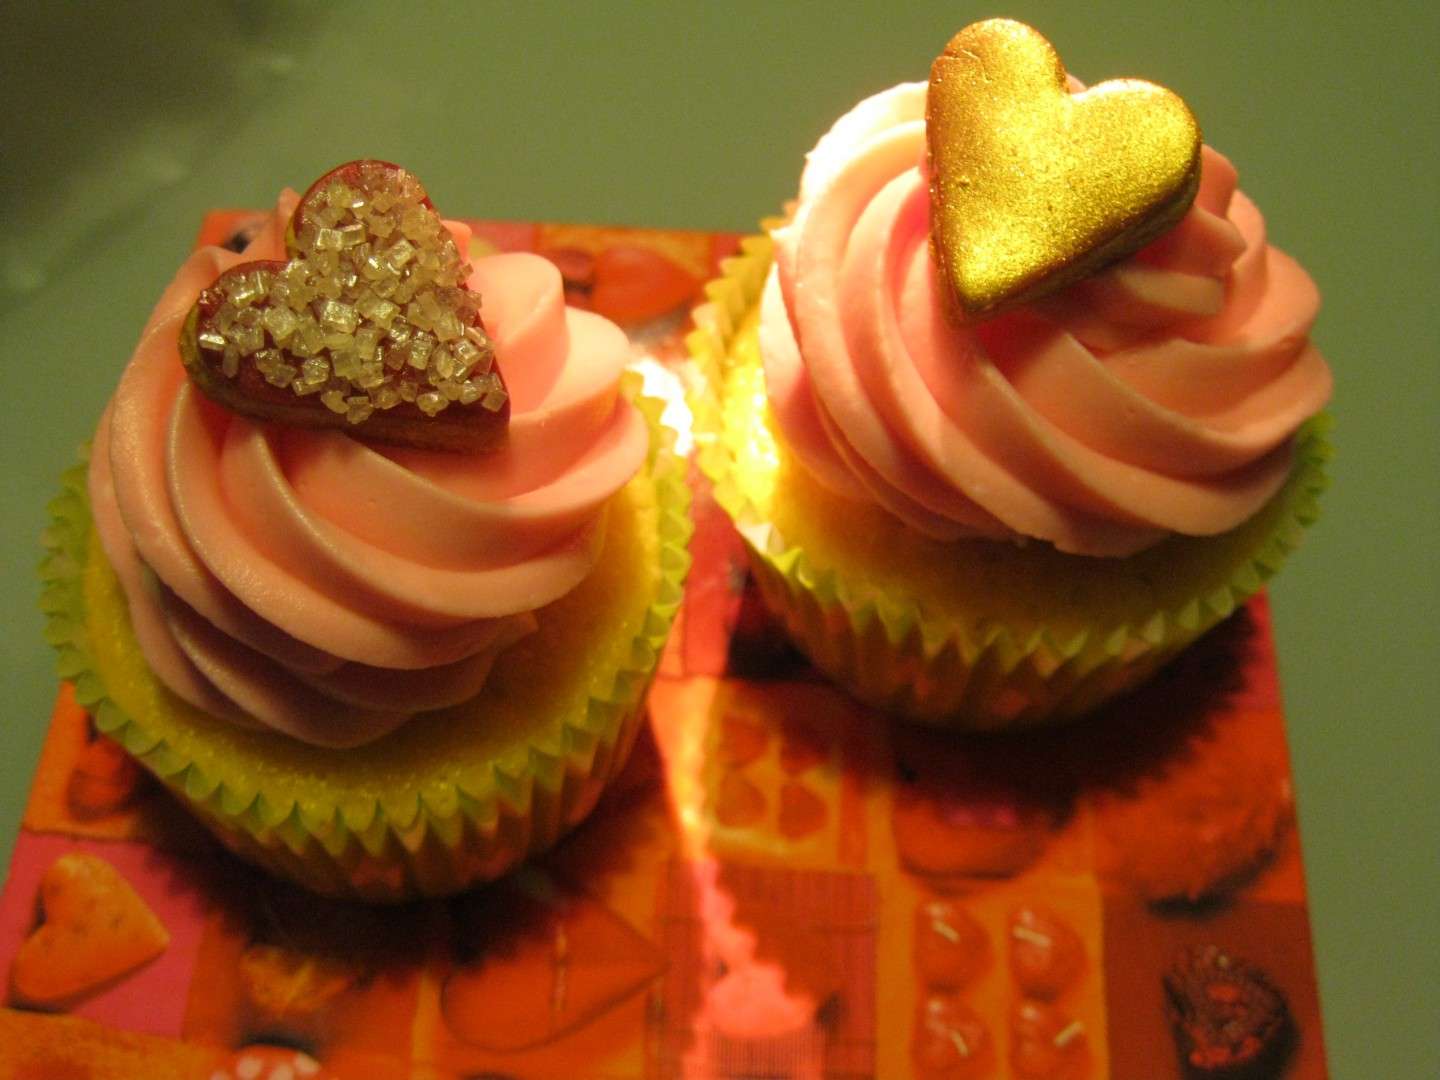 Cupcake love